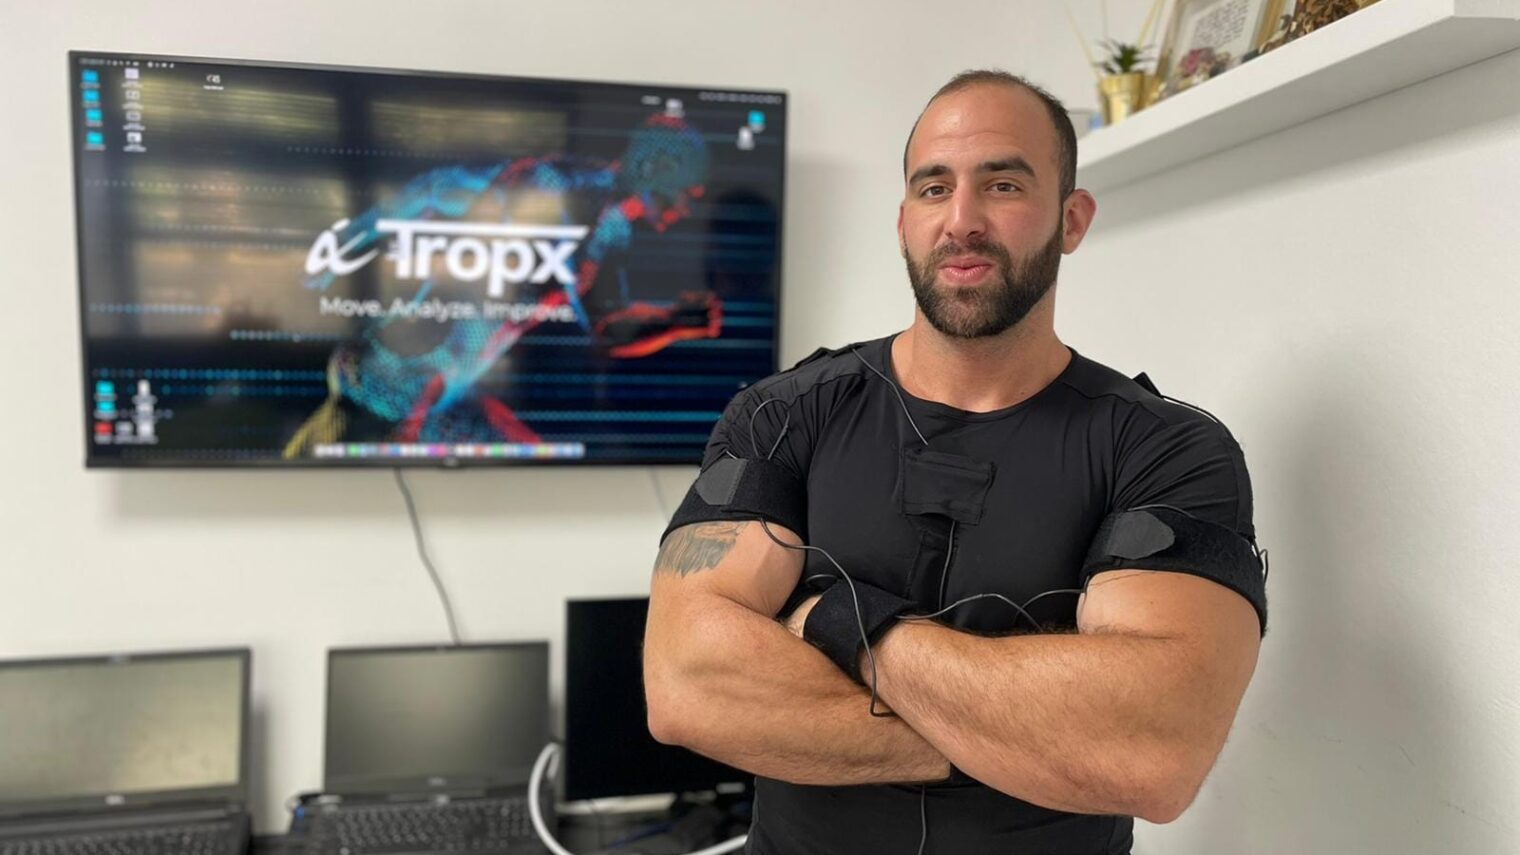 Salay Haim Raveh, founder of Tropx smart sports clothing company. Photo courtesy of Tropx